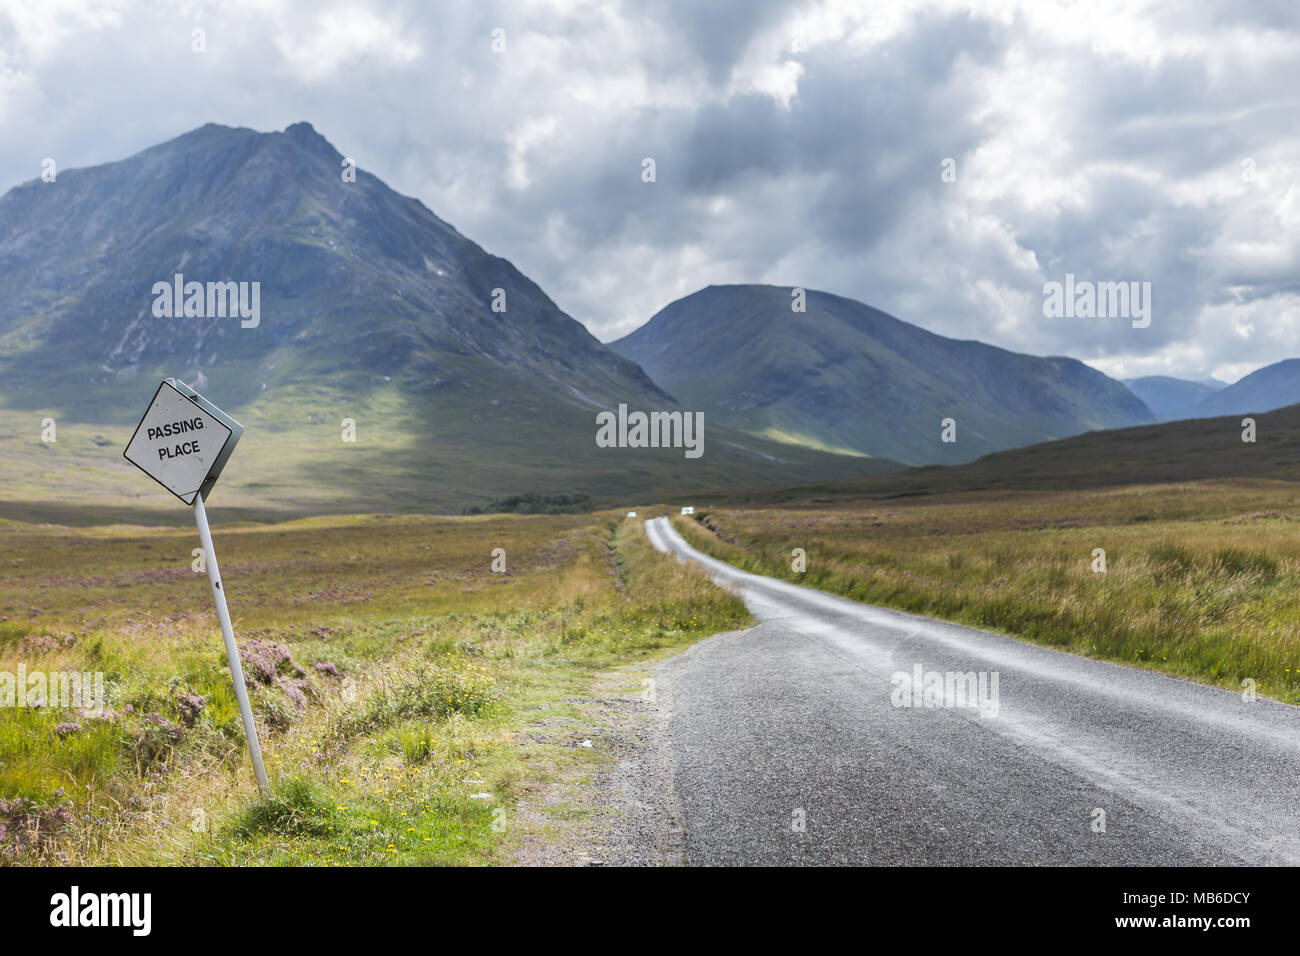 passing place sign beside empty road, glencoe, scotland Stock Photo